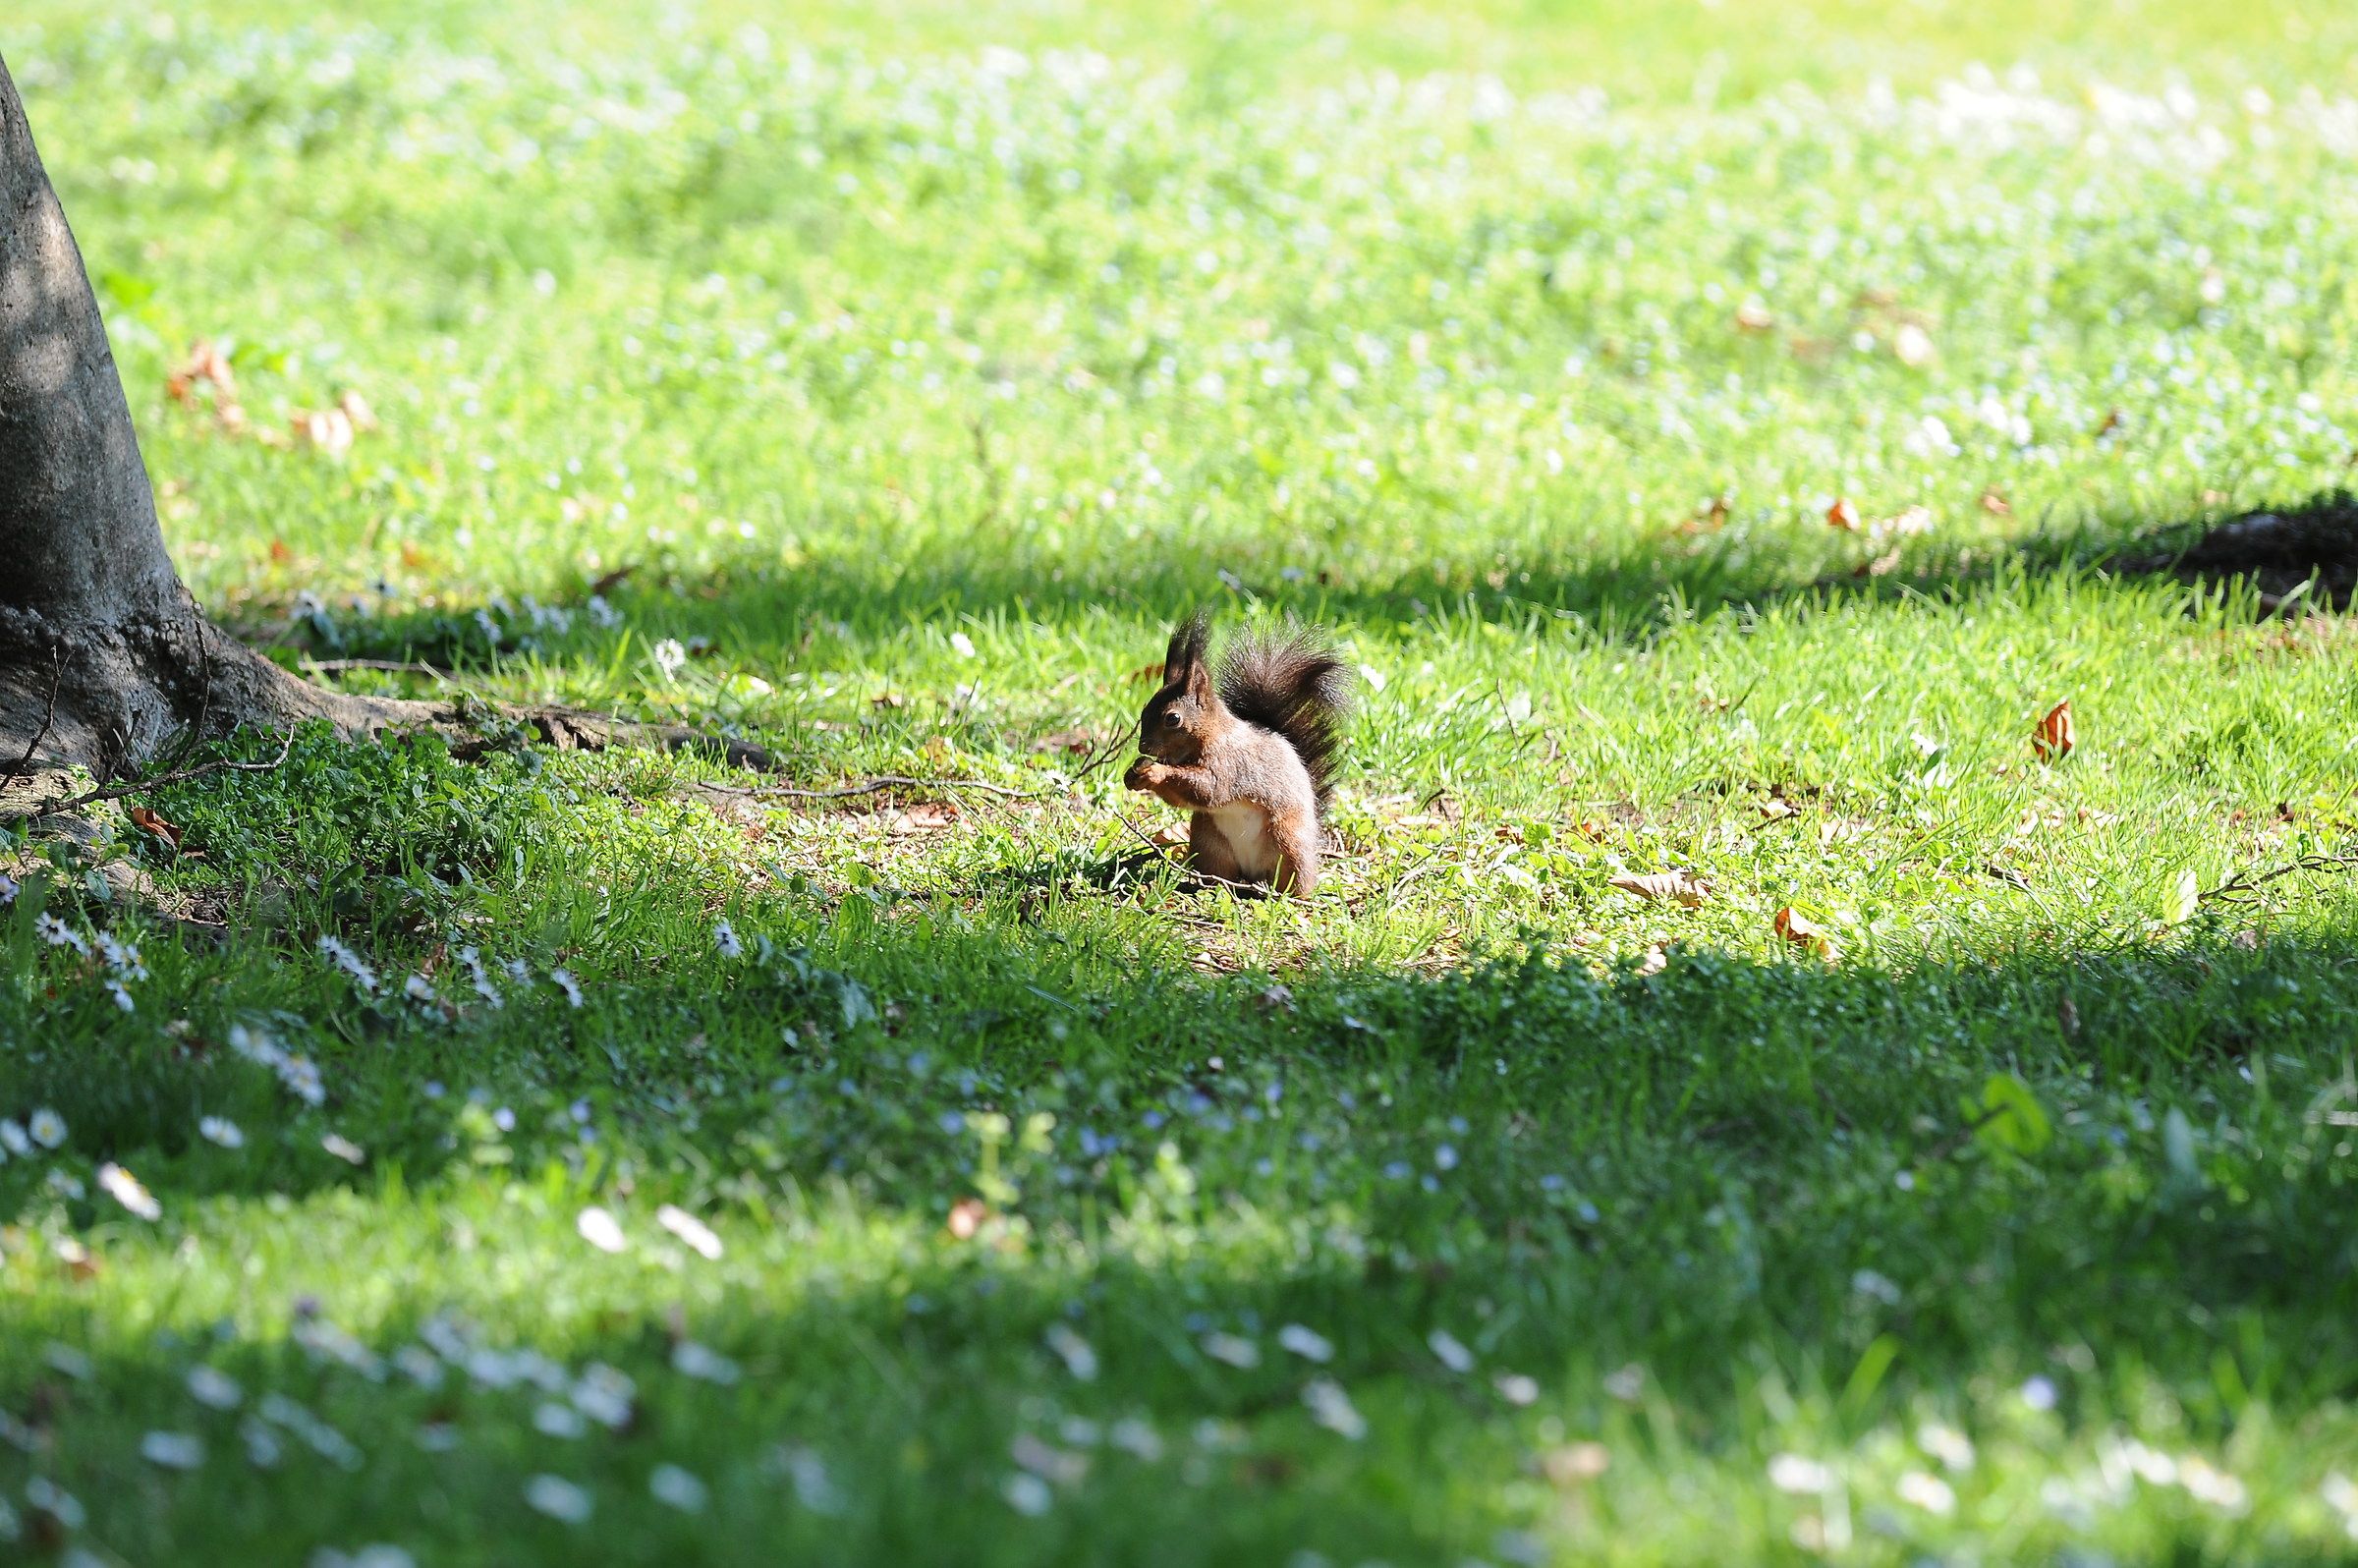 squirrel at the calloria Simione park...